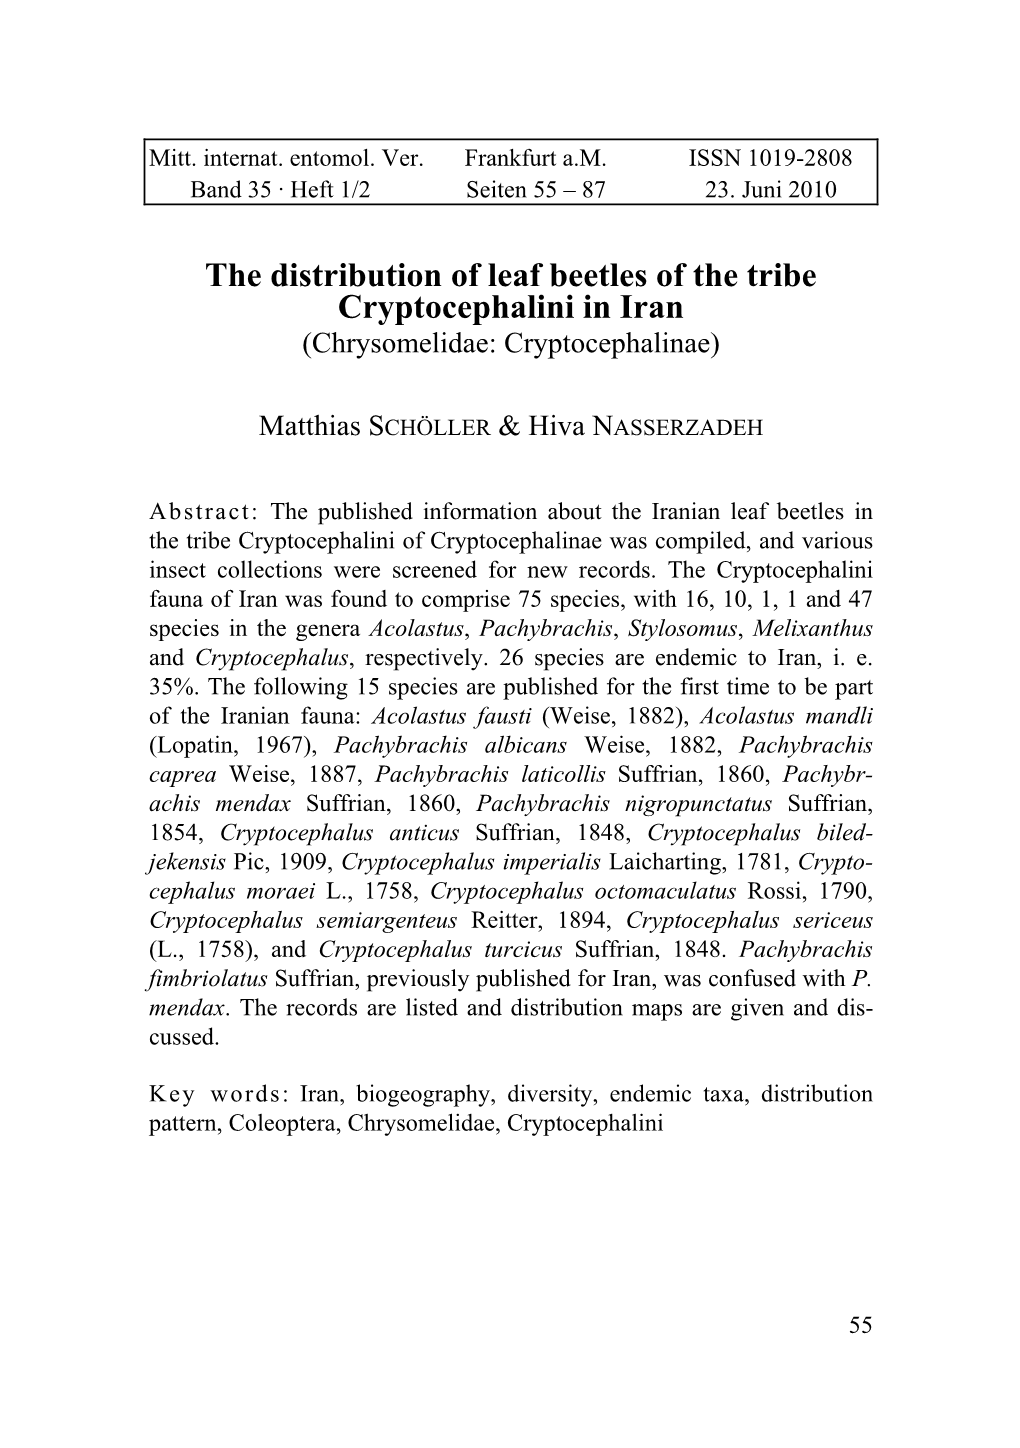 The Distribution of Leaf Beetles of the Tribe Cryptocephalini in Iran (Chrysomelidae: Cryptocephalinae)